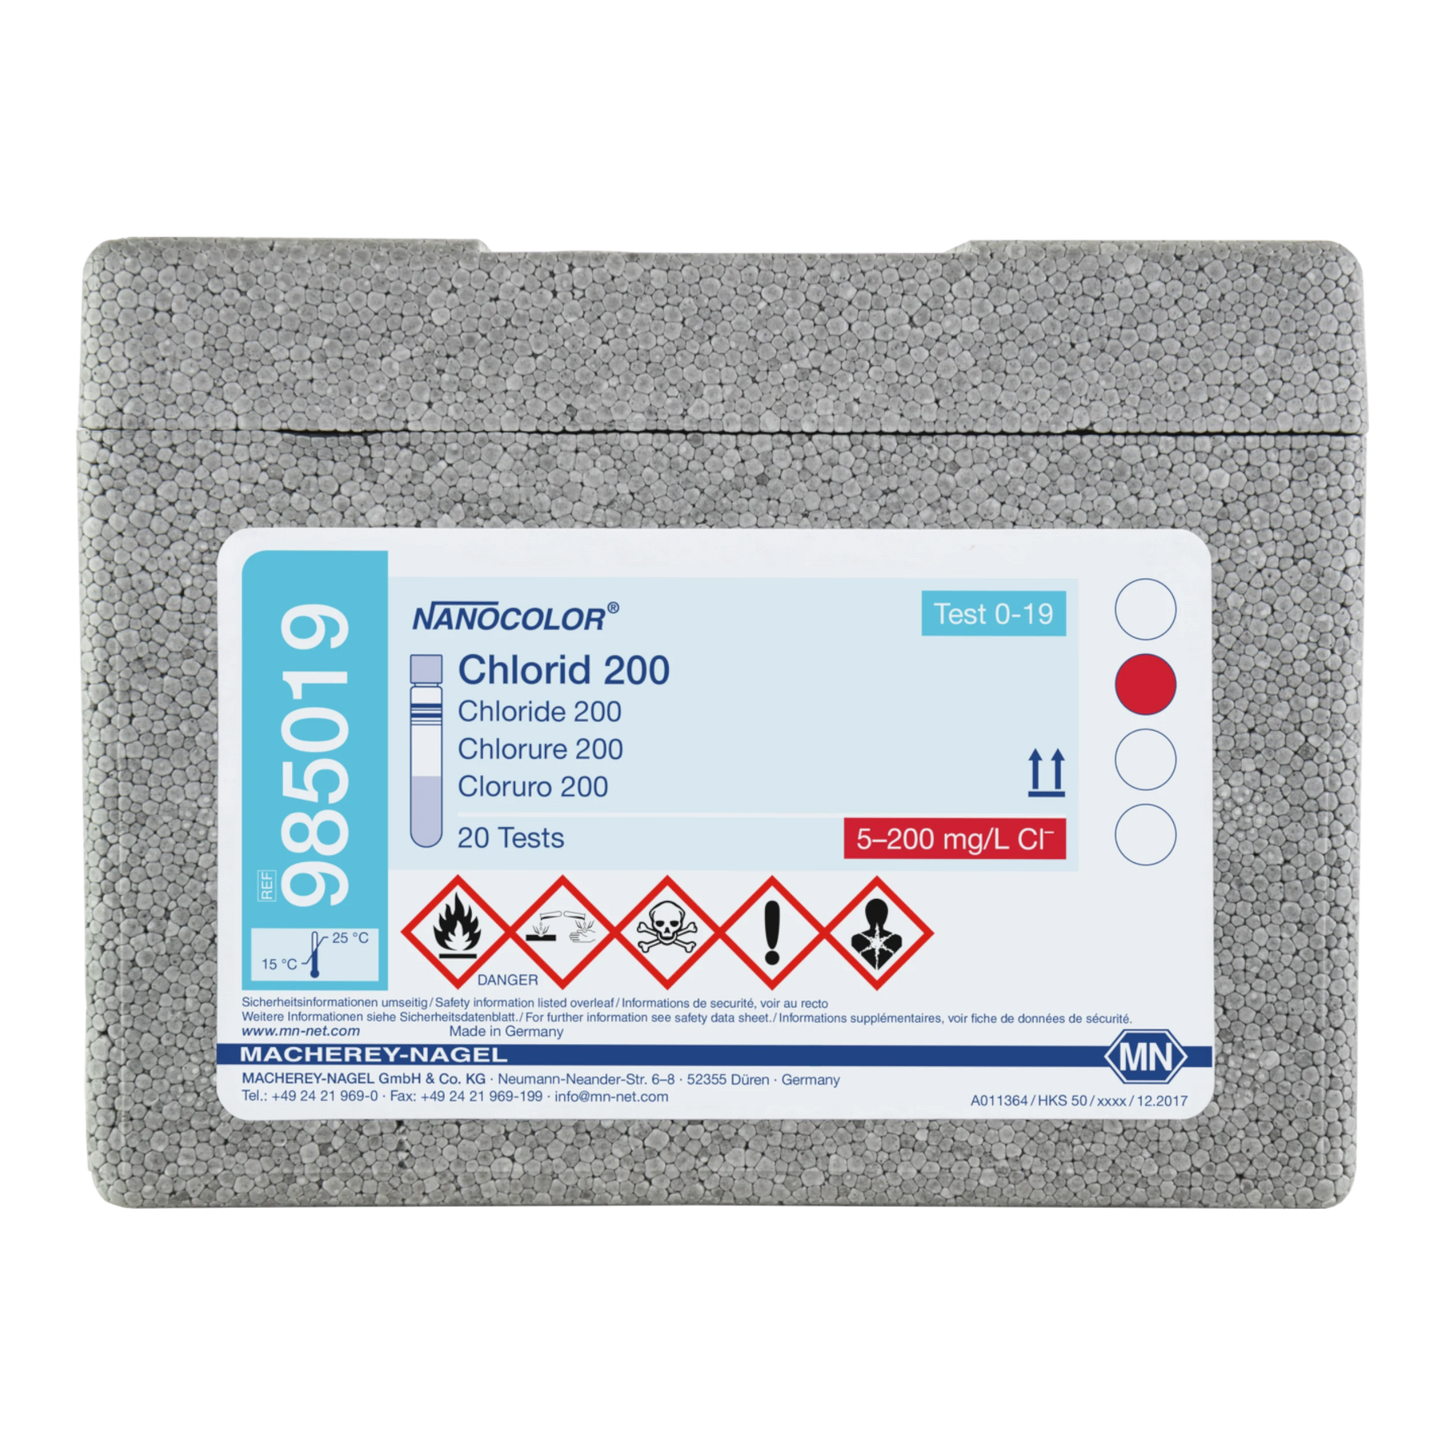 MACHEREY-NAGEL NANOCOLOR Rundküvettentest Chlorid 200 (985019)